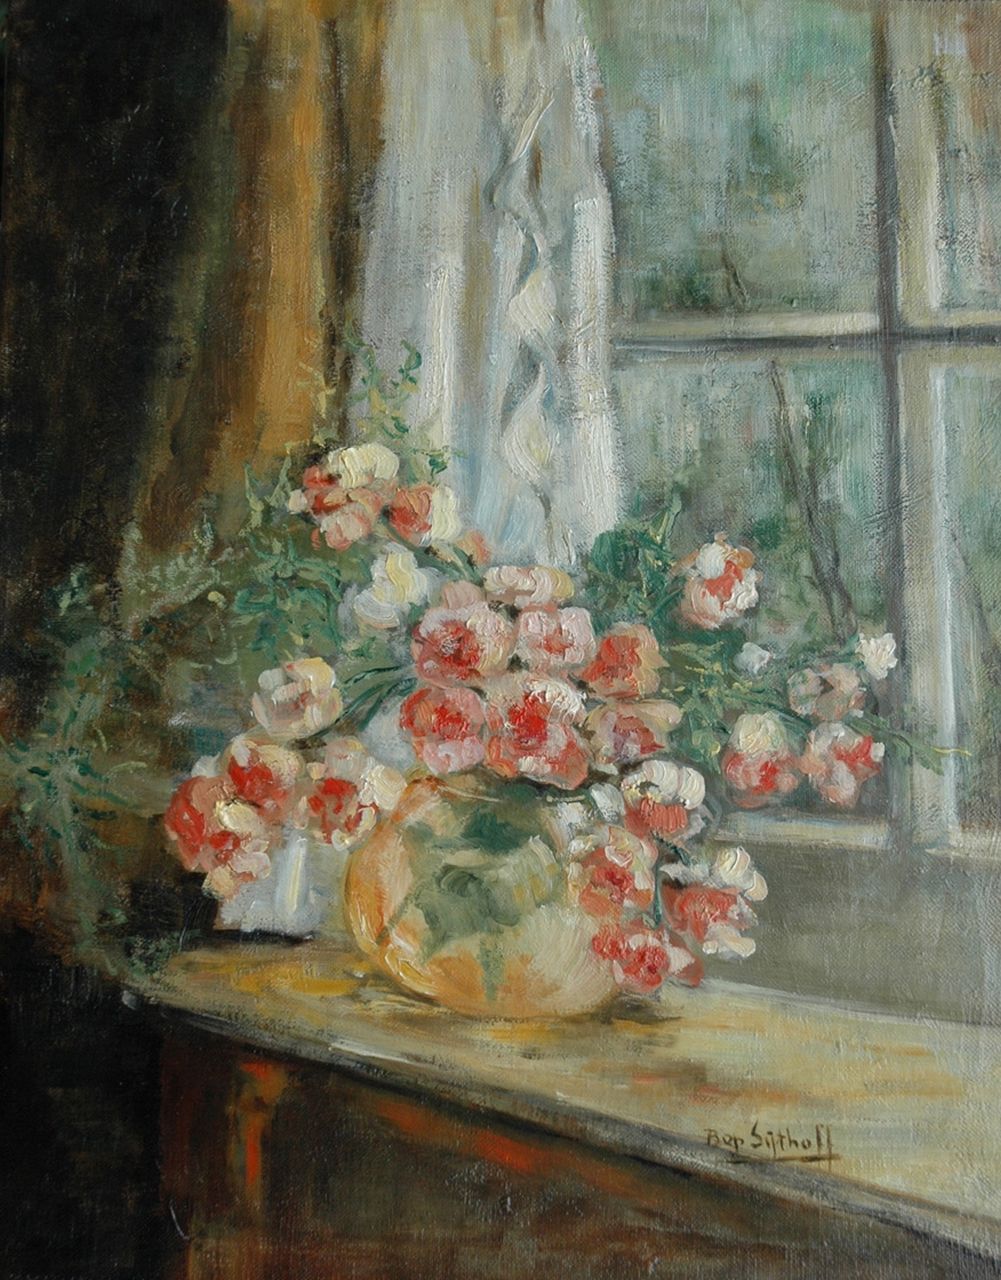 Bep Sijthoff | Summerflowers on the windowsill, oil on canvas, 45.5 x 35.5 cm, signed l.r.